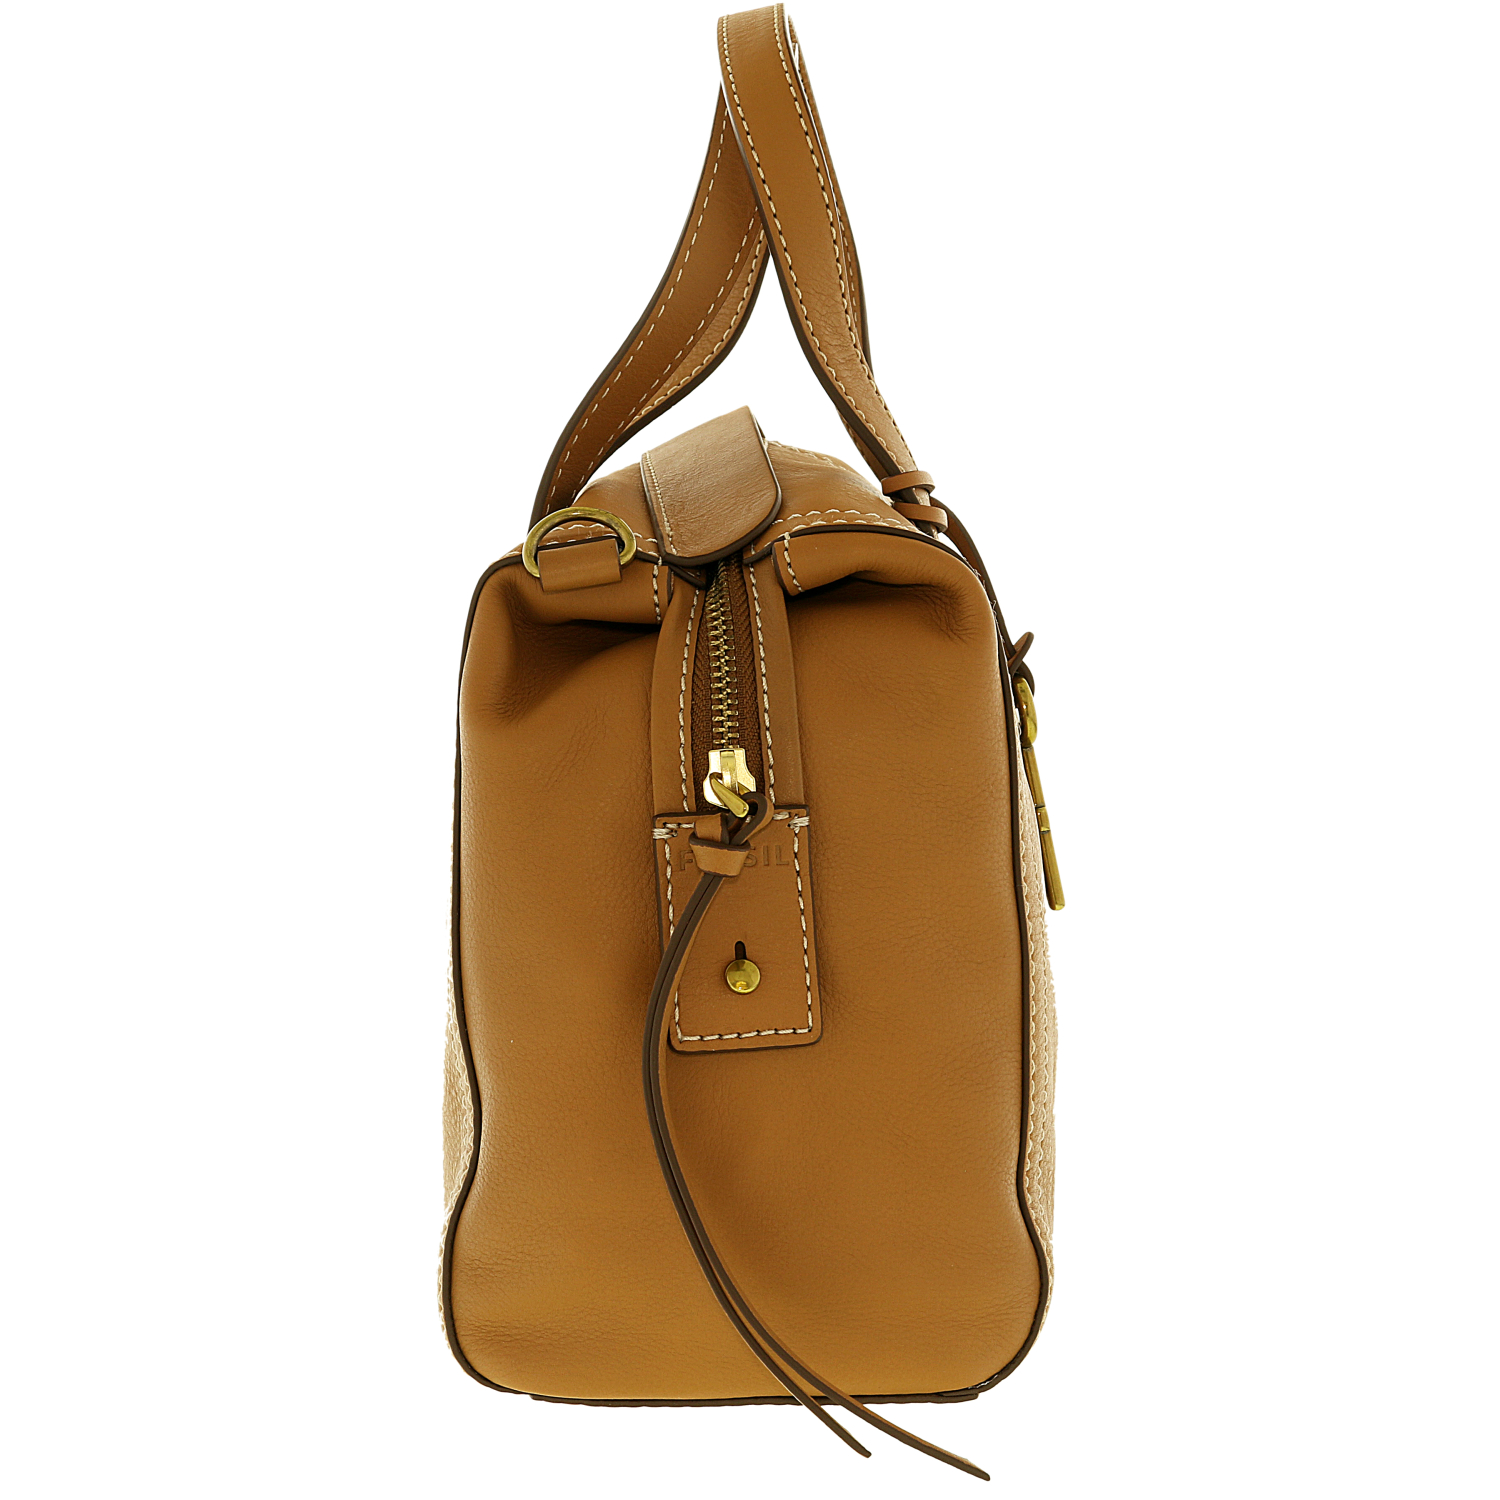 Fossil Women's Emma Convertible Leather Leather Shoulder Bag Satchel | eBay